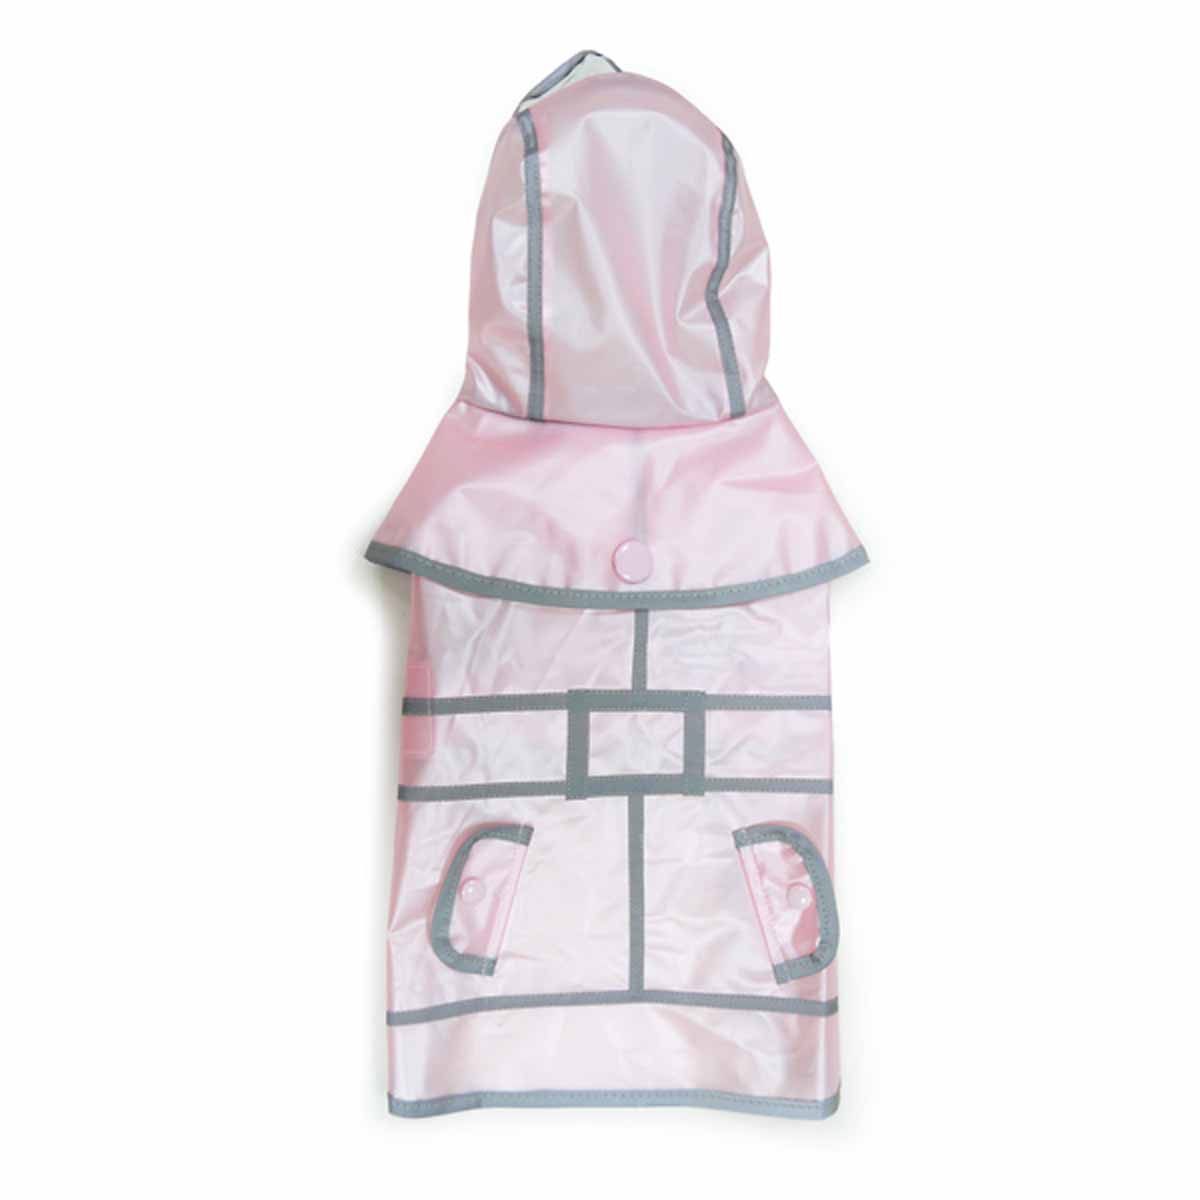 Jelly Dog Raincoat by Dogo - Pink